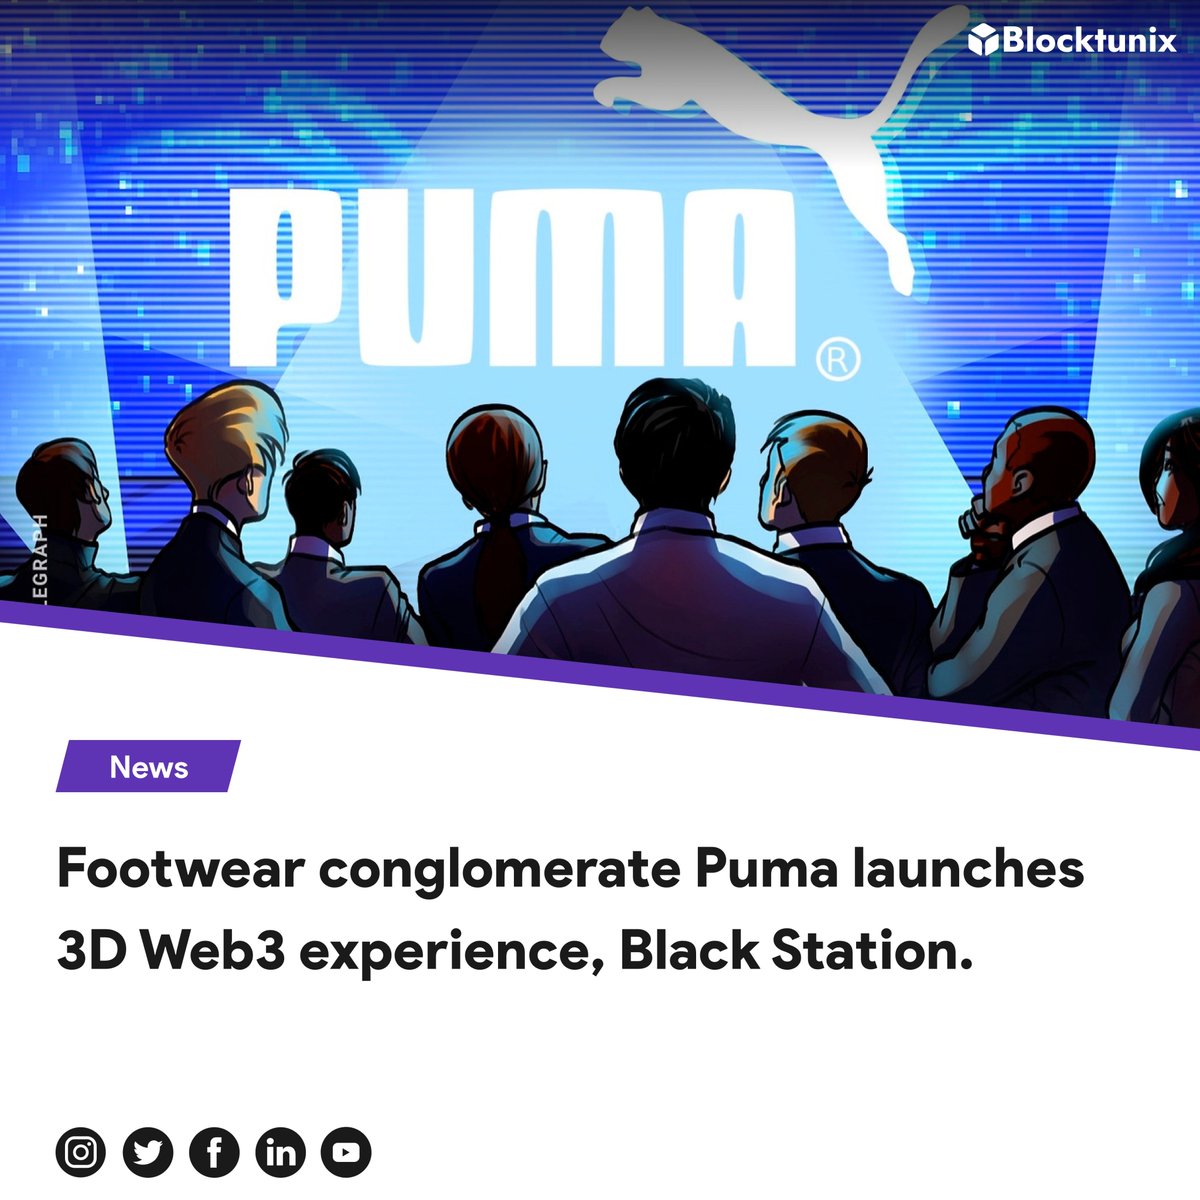 Puma, a German footwear corporation, launched Black Station, a 3D metaverse experience, on June 13. 
.
.
#nft #puma #trending #blocktunix #experience #blackstation #nonfungibletokens #blockchain #metaverse #webdevelopment #web3 #launch #footwear #blockchaintechnology #Growth